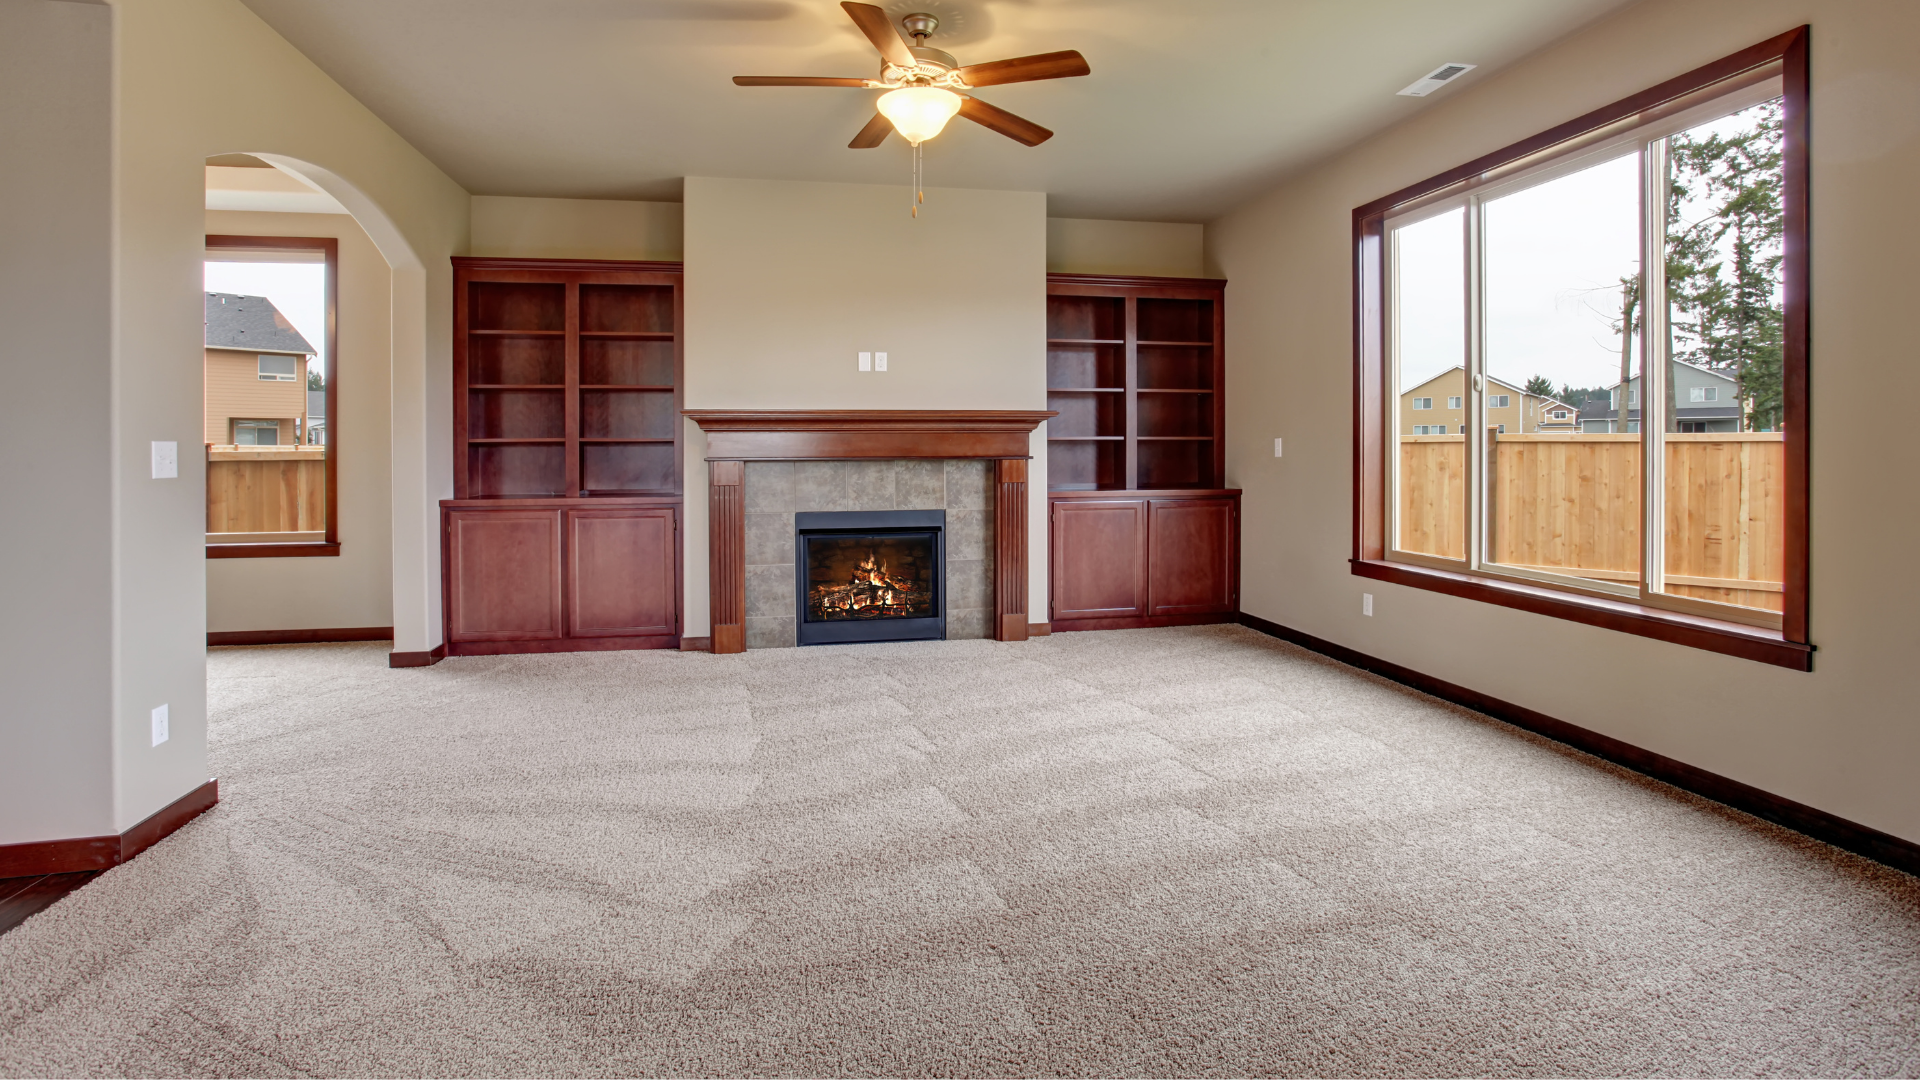 Carpet Flooring in Living Room